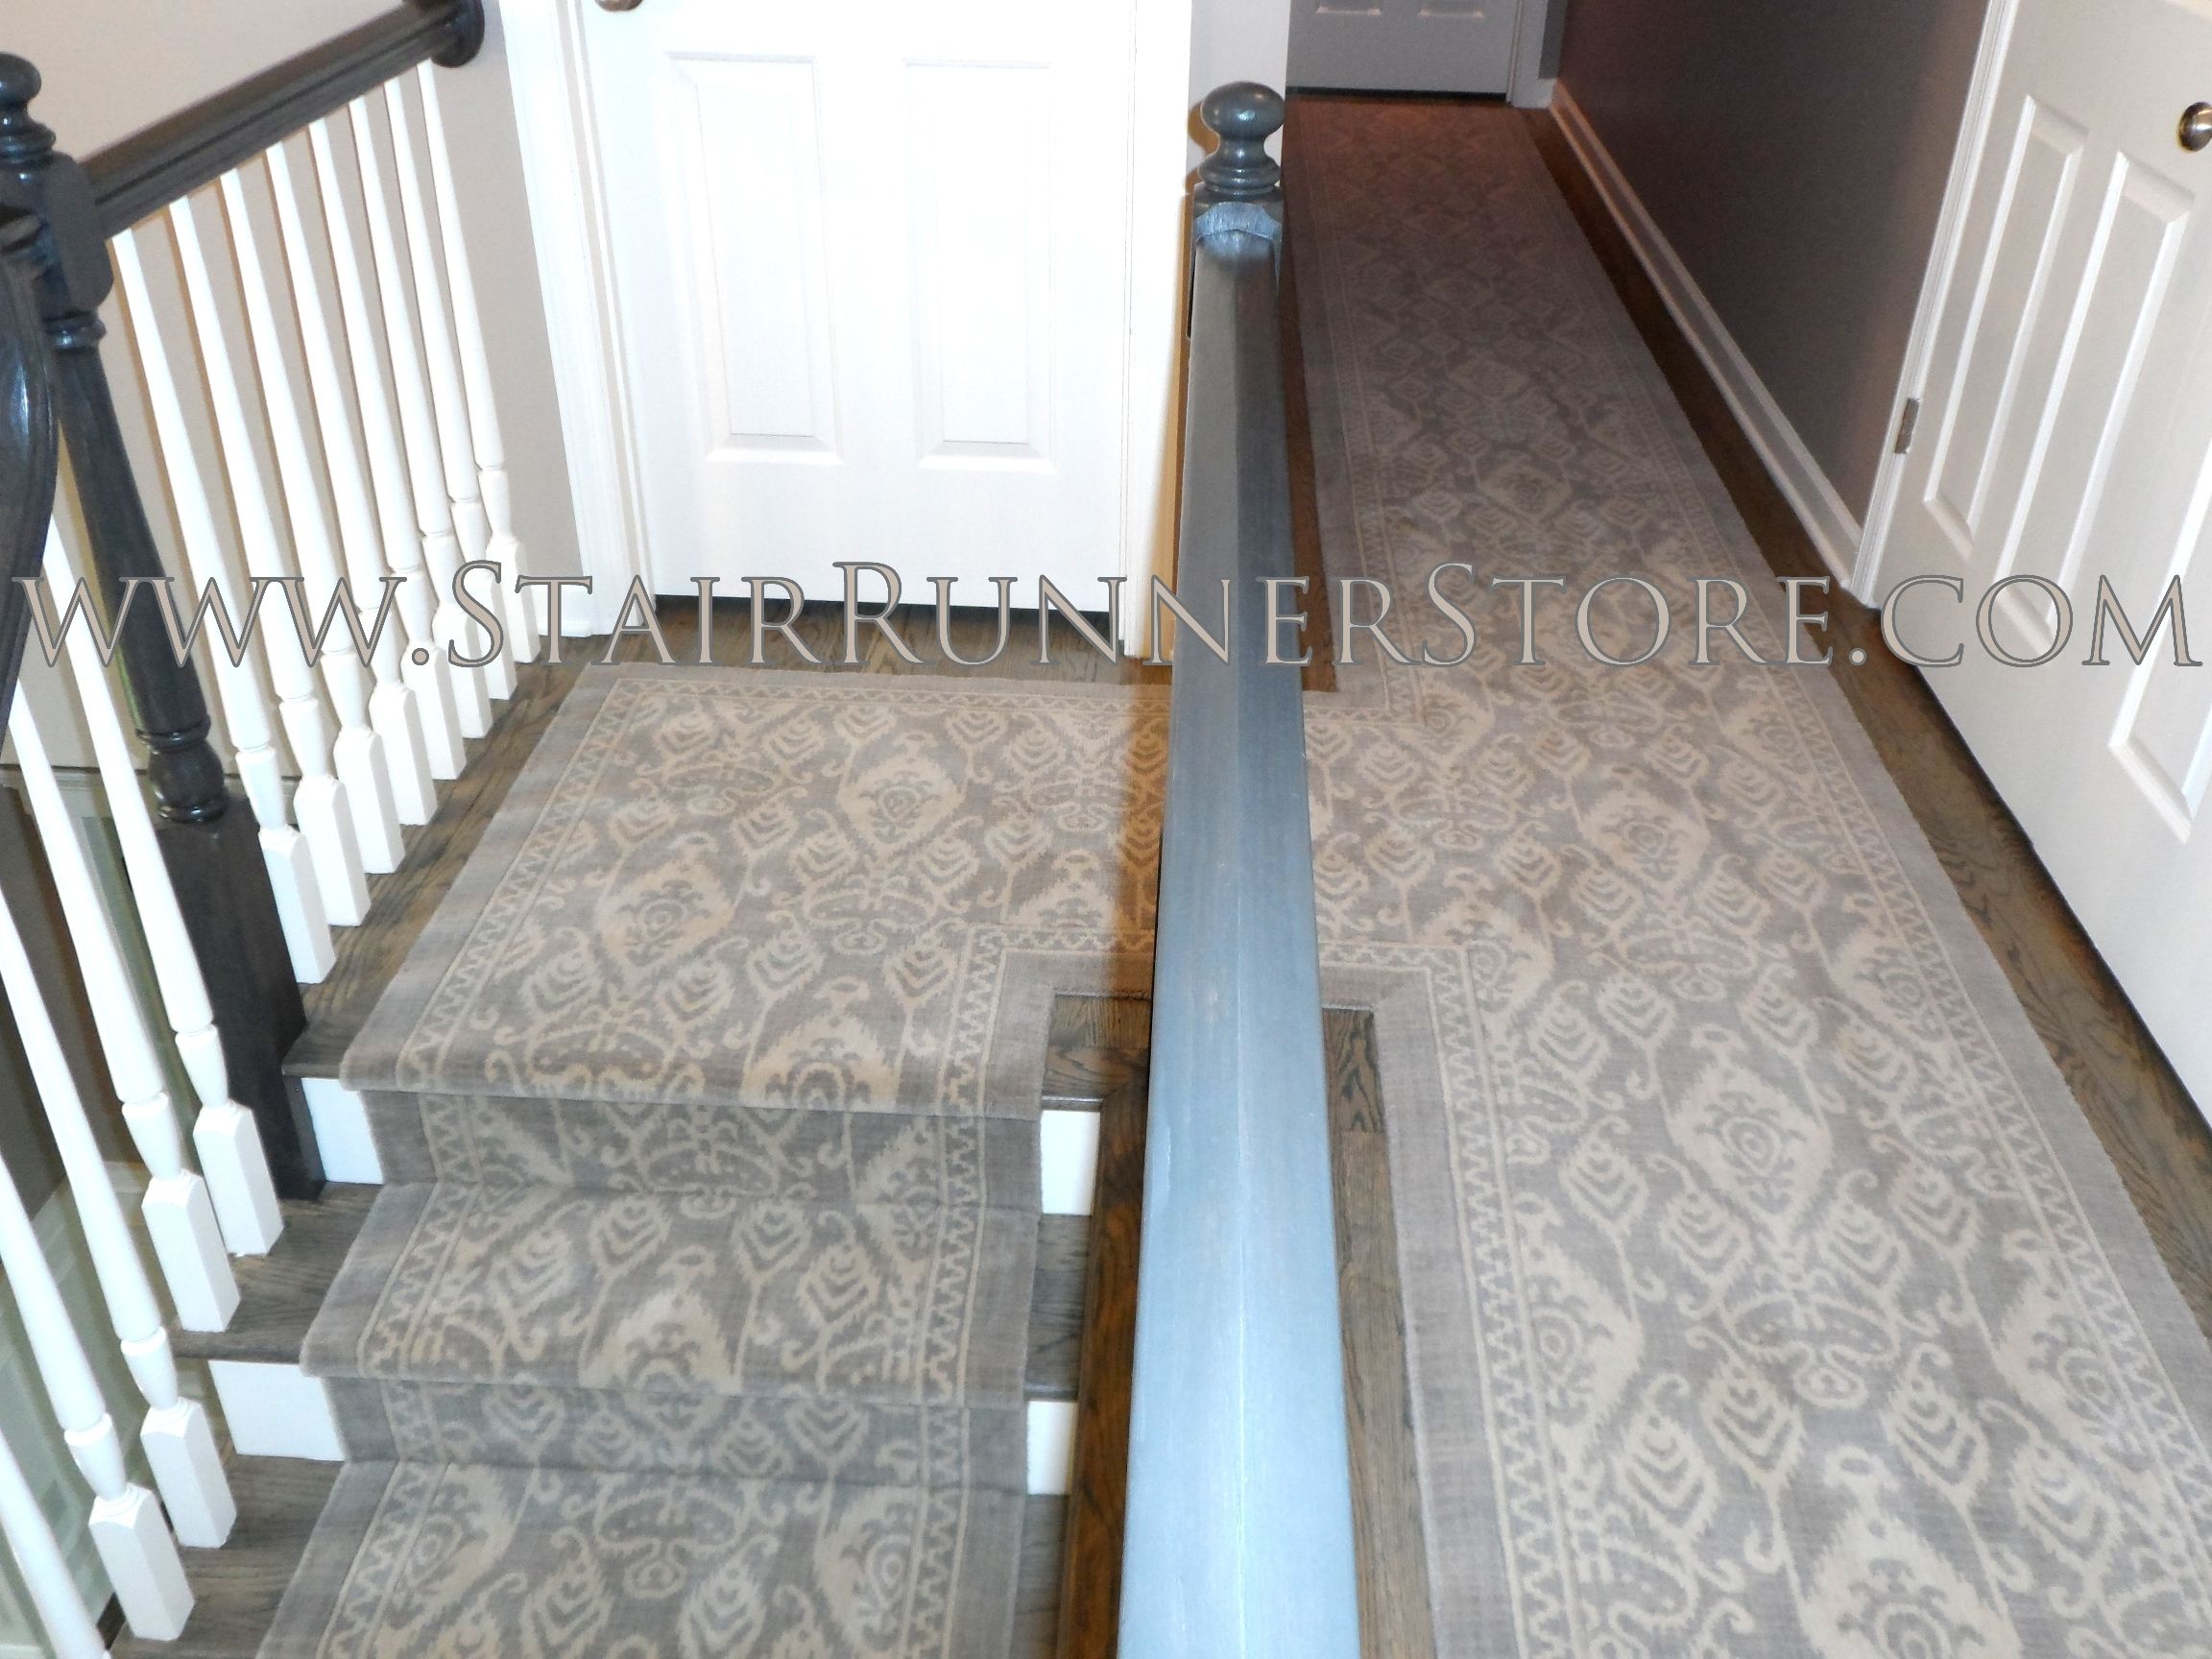 Custom Hallway Runner Installations Stair Runner Store Blog With Long Carpet Runners For Hallways (Photo 13 of 20)